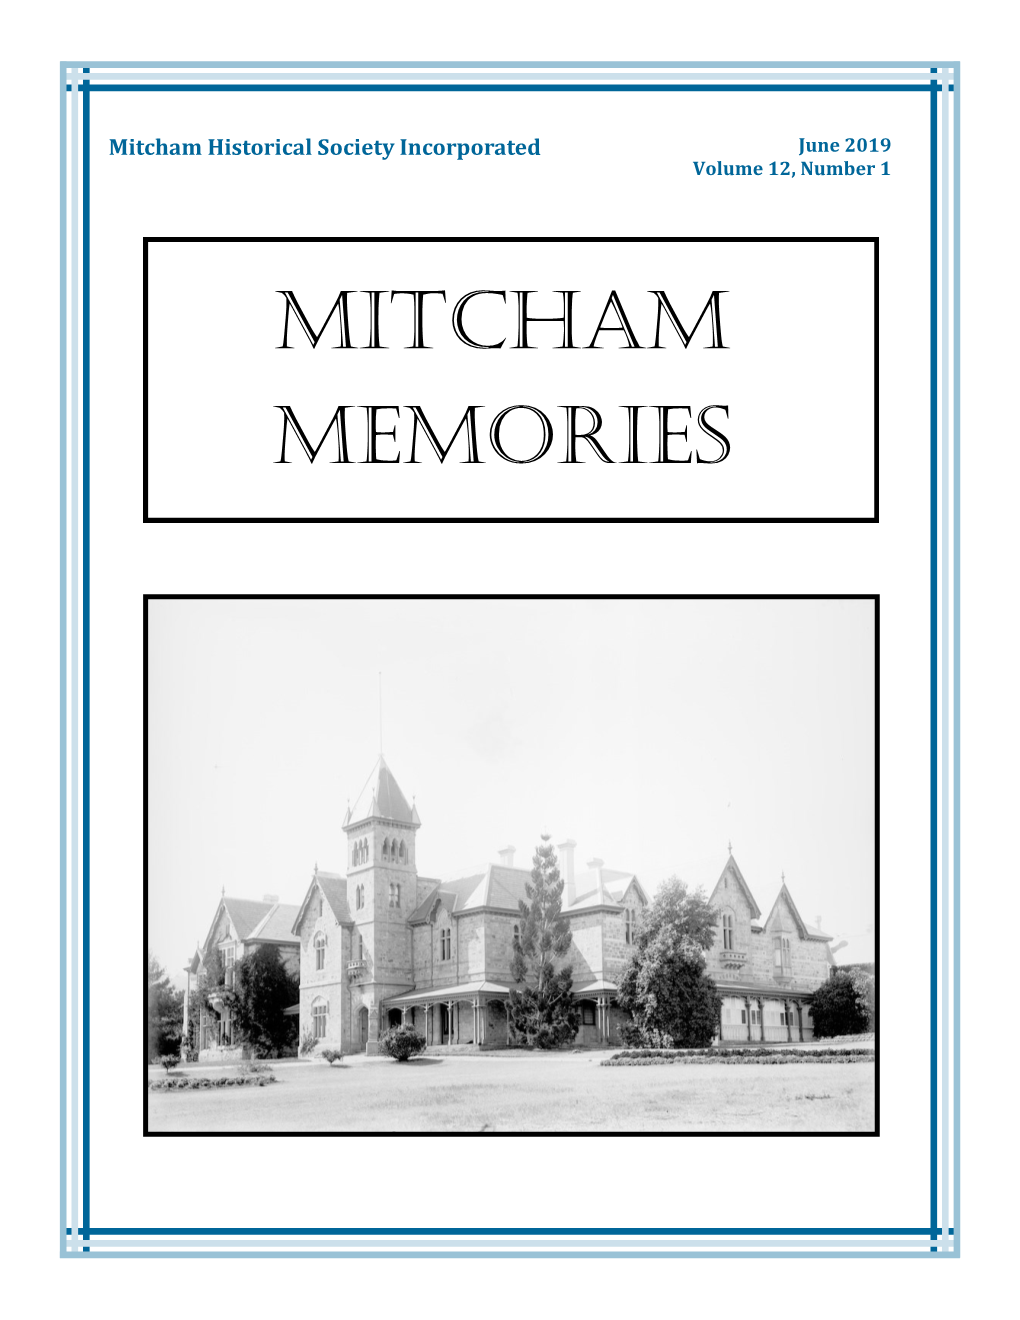 Mitcham Memories Mitcham Historical Society Incorporated June 2019 Volume 12, Number 1